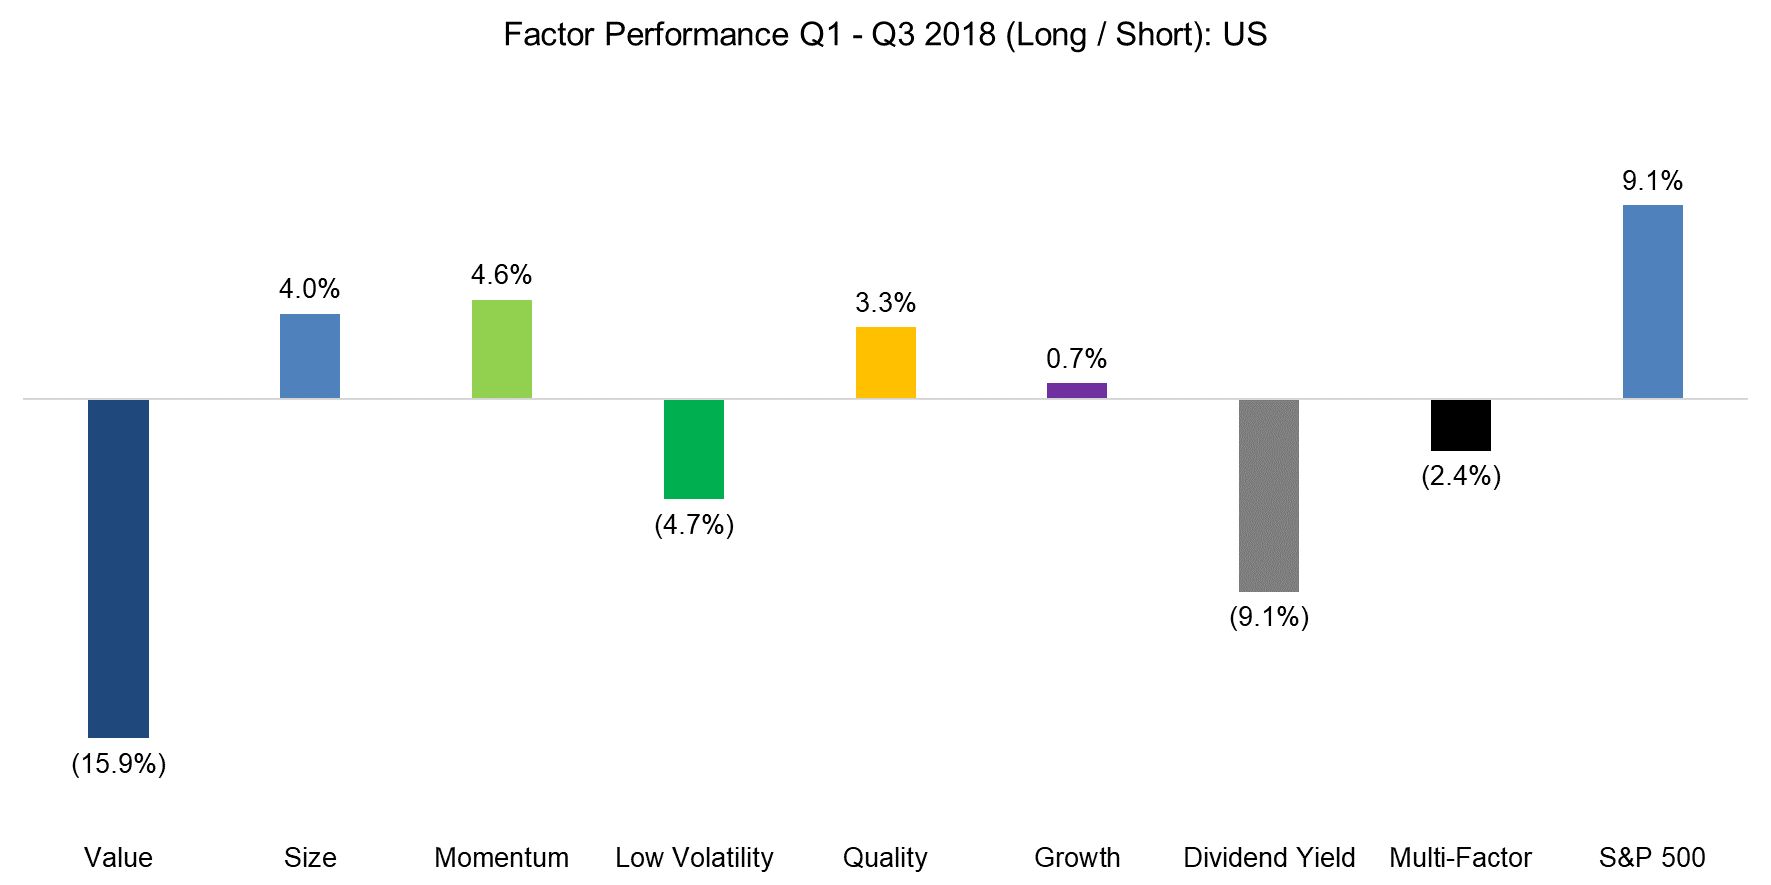 Factor Performance Q1 - Q3 2018 (Long Short) US